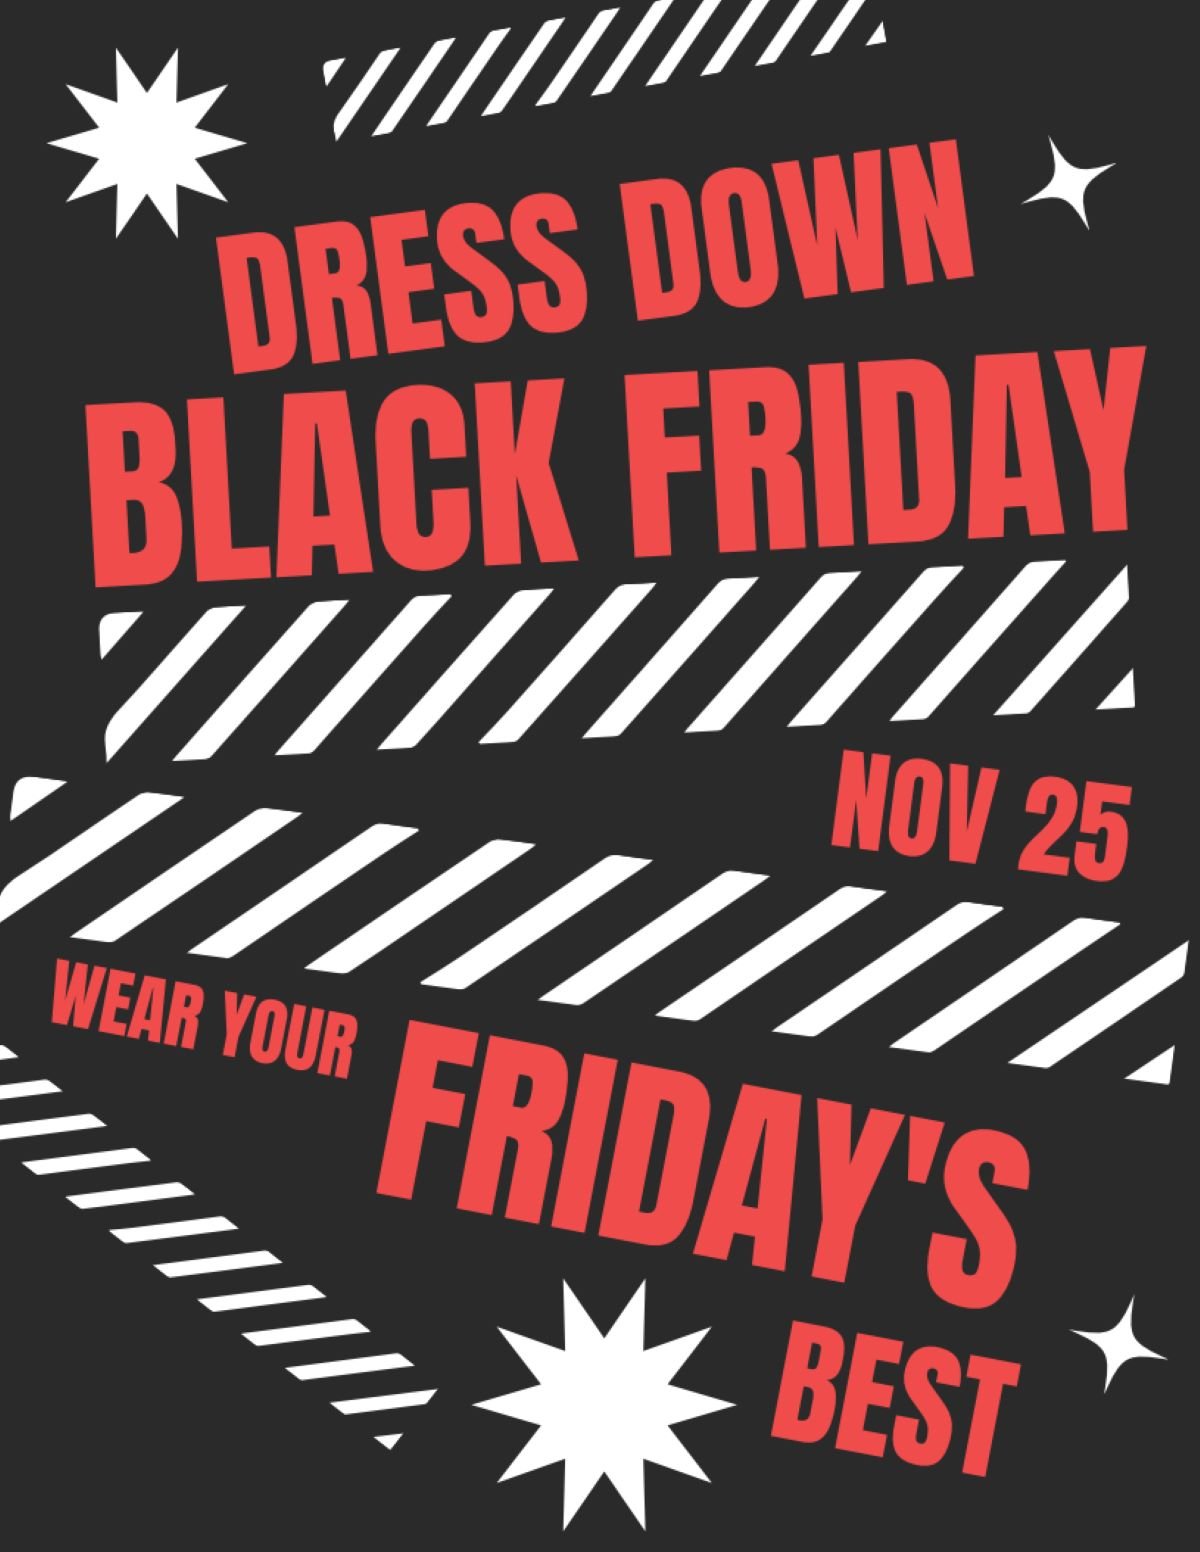 Black Friday Event Flyer